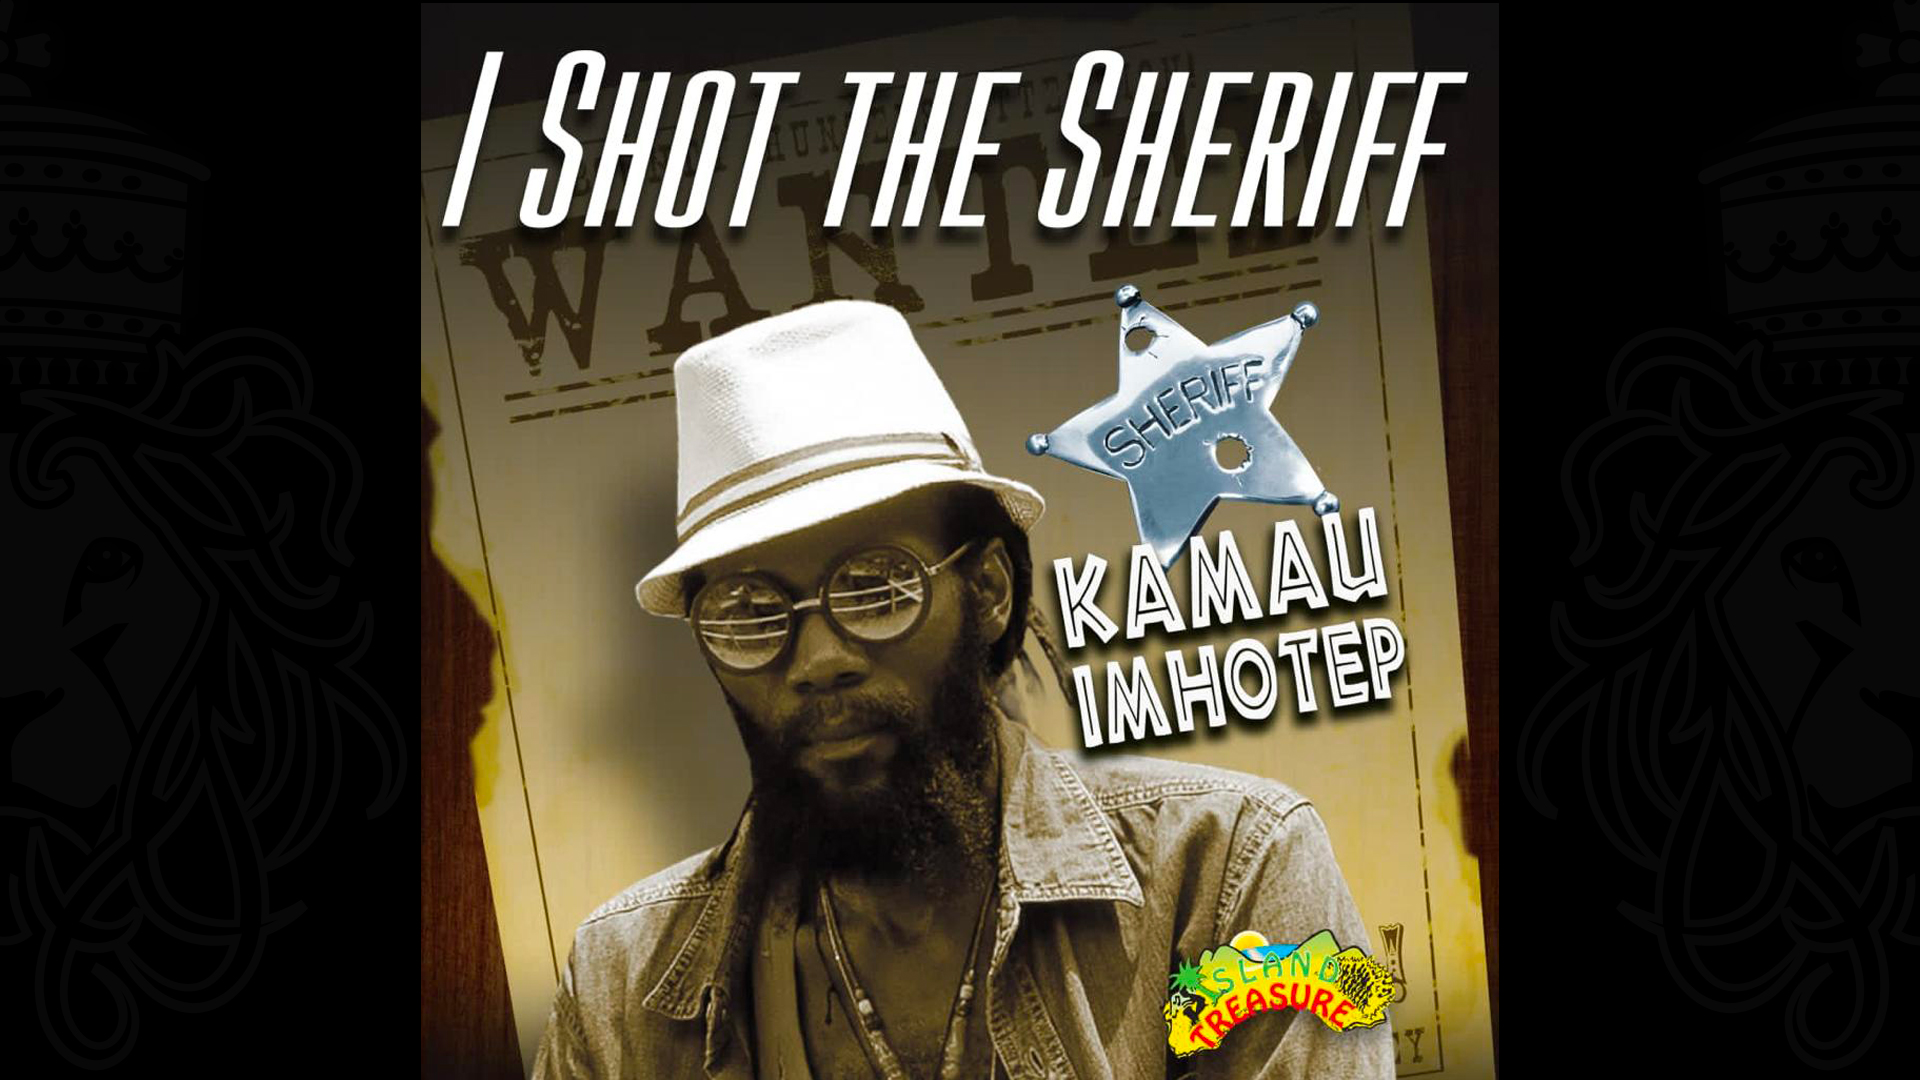 I shot the sheriff